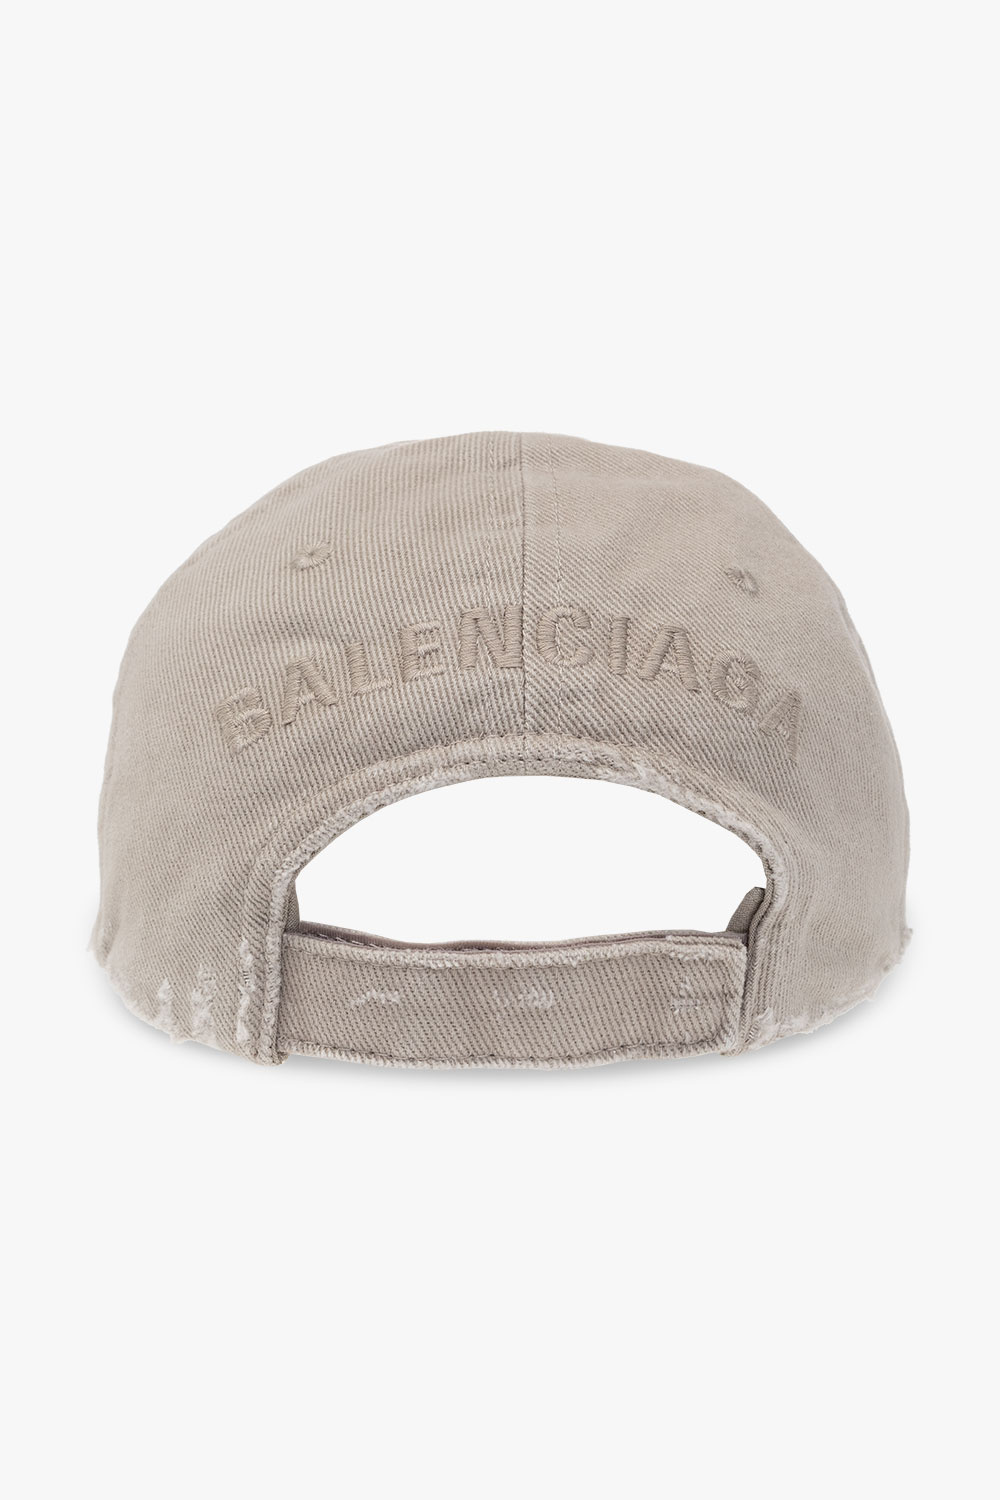 Balenciaga Nike bucket hat with logo in black